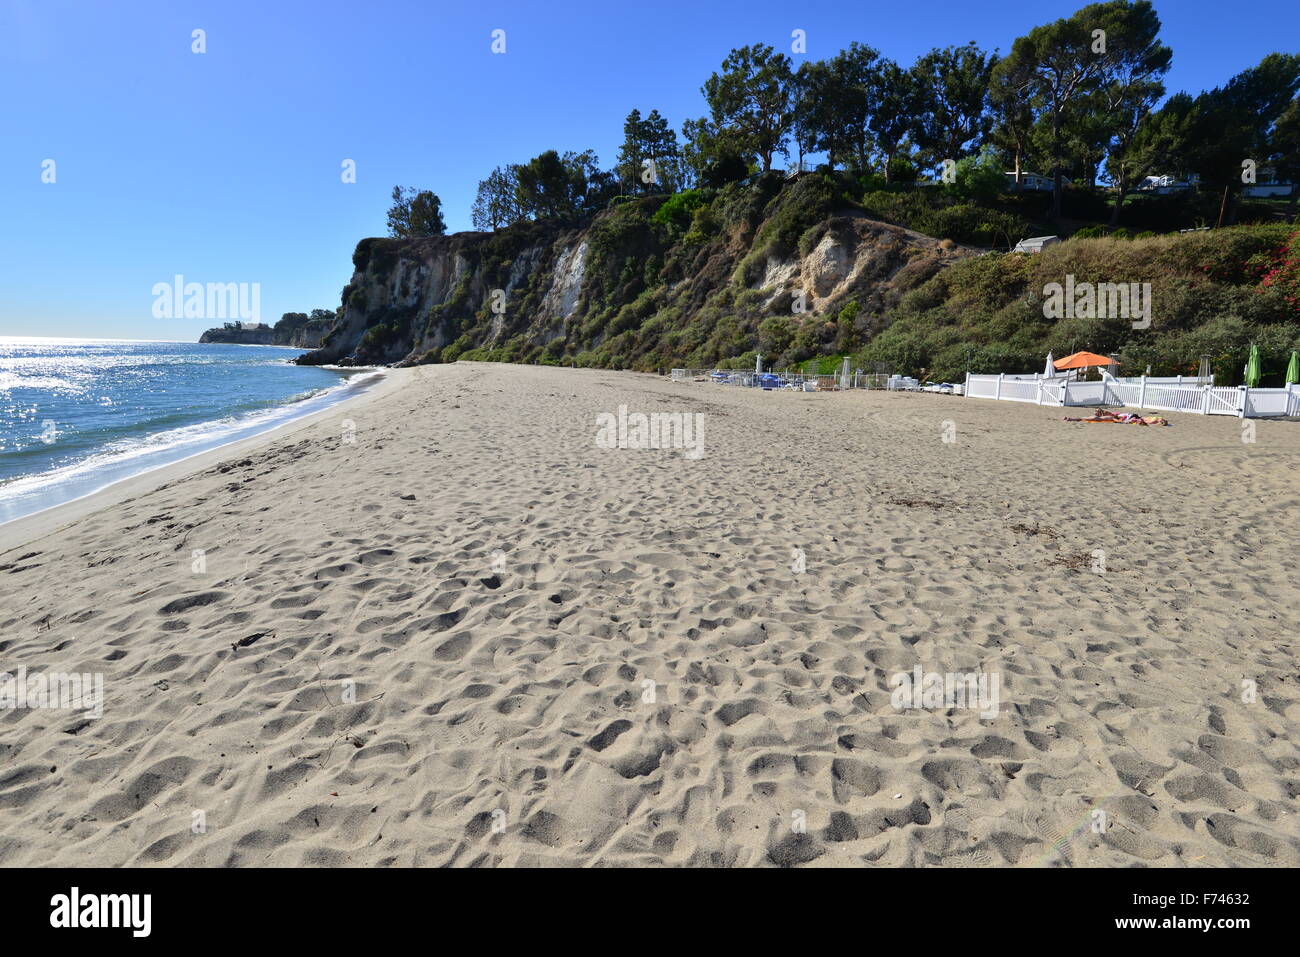 Paradise Cove at Malibu, Los Angeles Stock Photo - Alamy